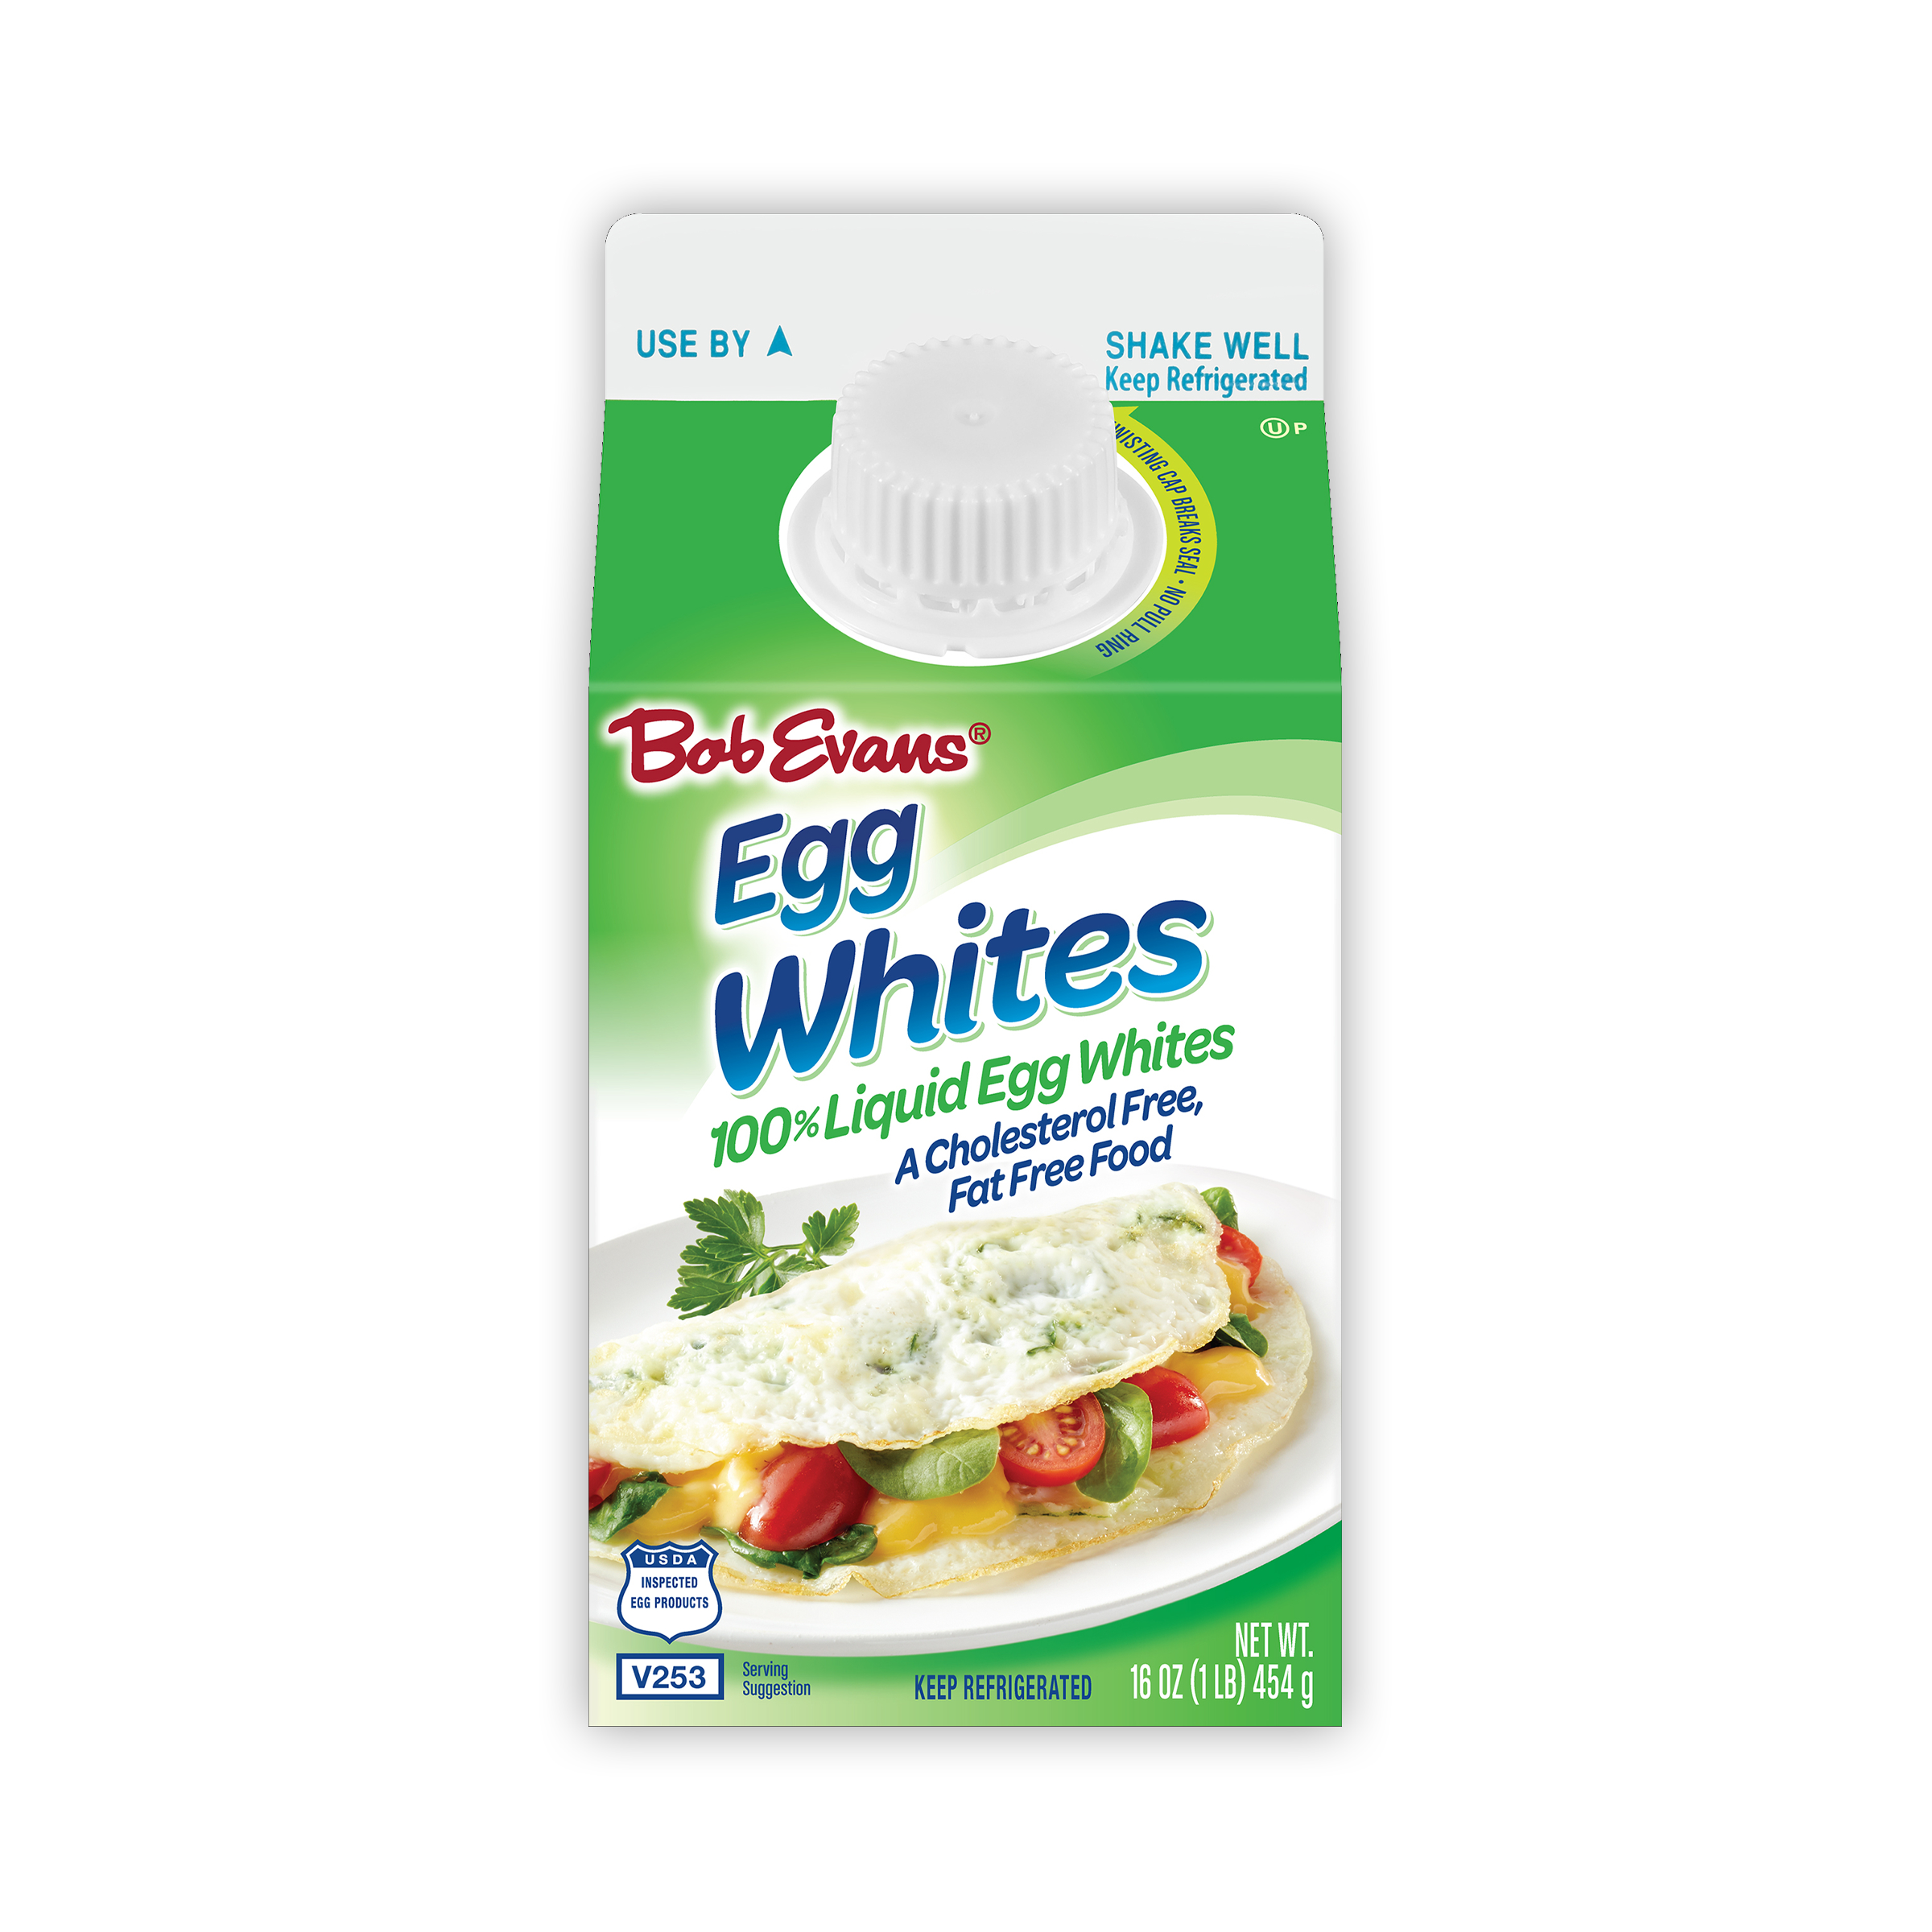 Bob Evans® 100% Liquid Egg Whites 16 oz. Carton product image